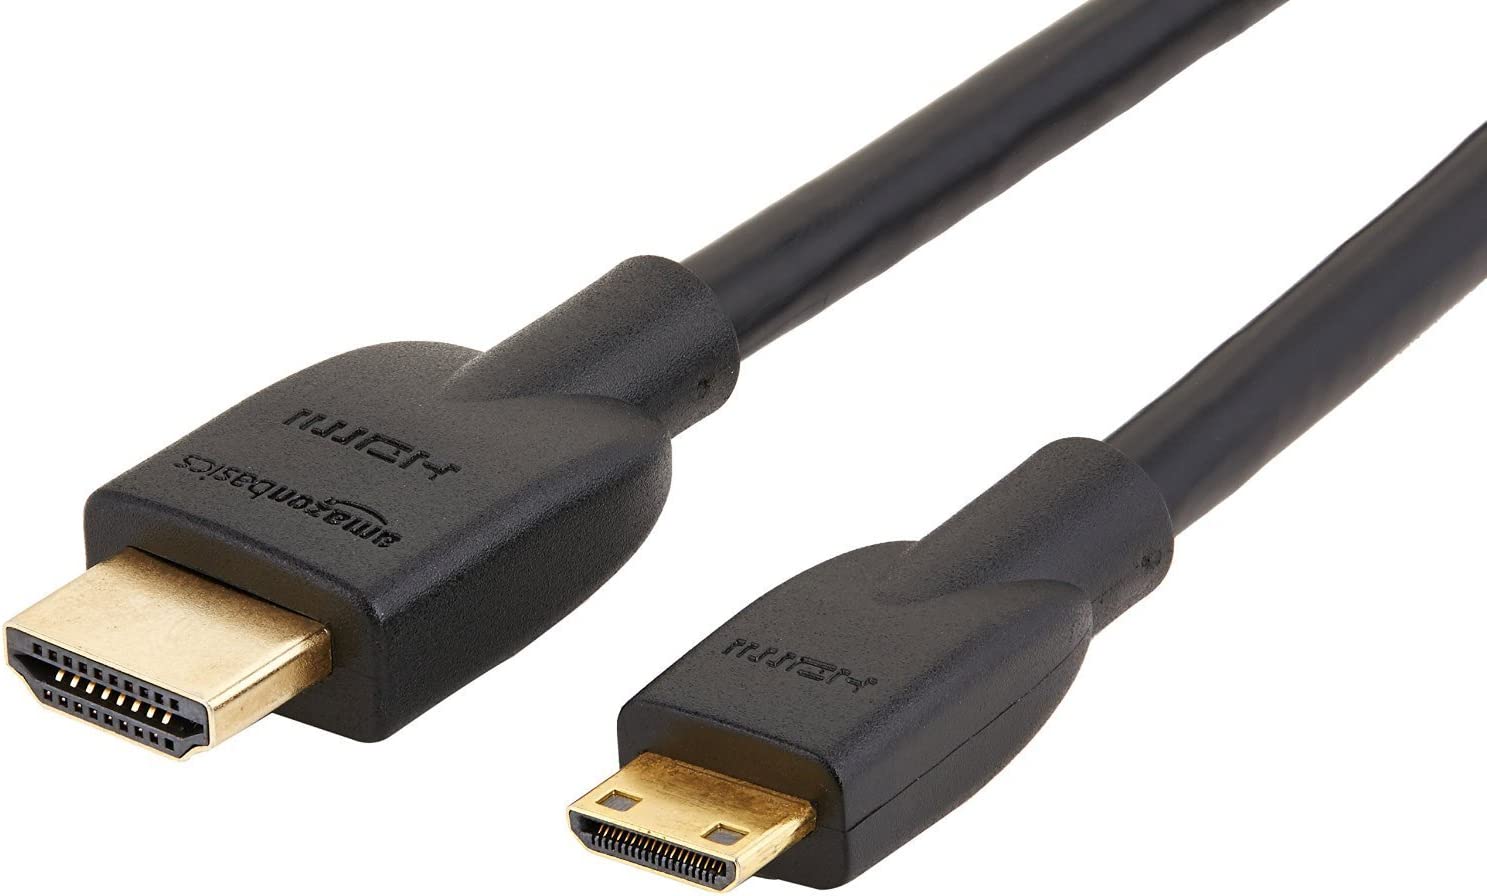 HDMI vs. Micro - Are The Key Differences?